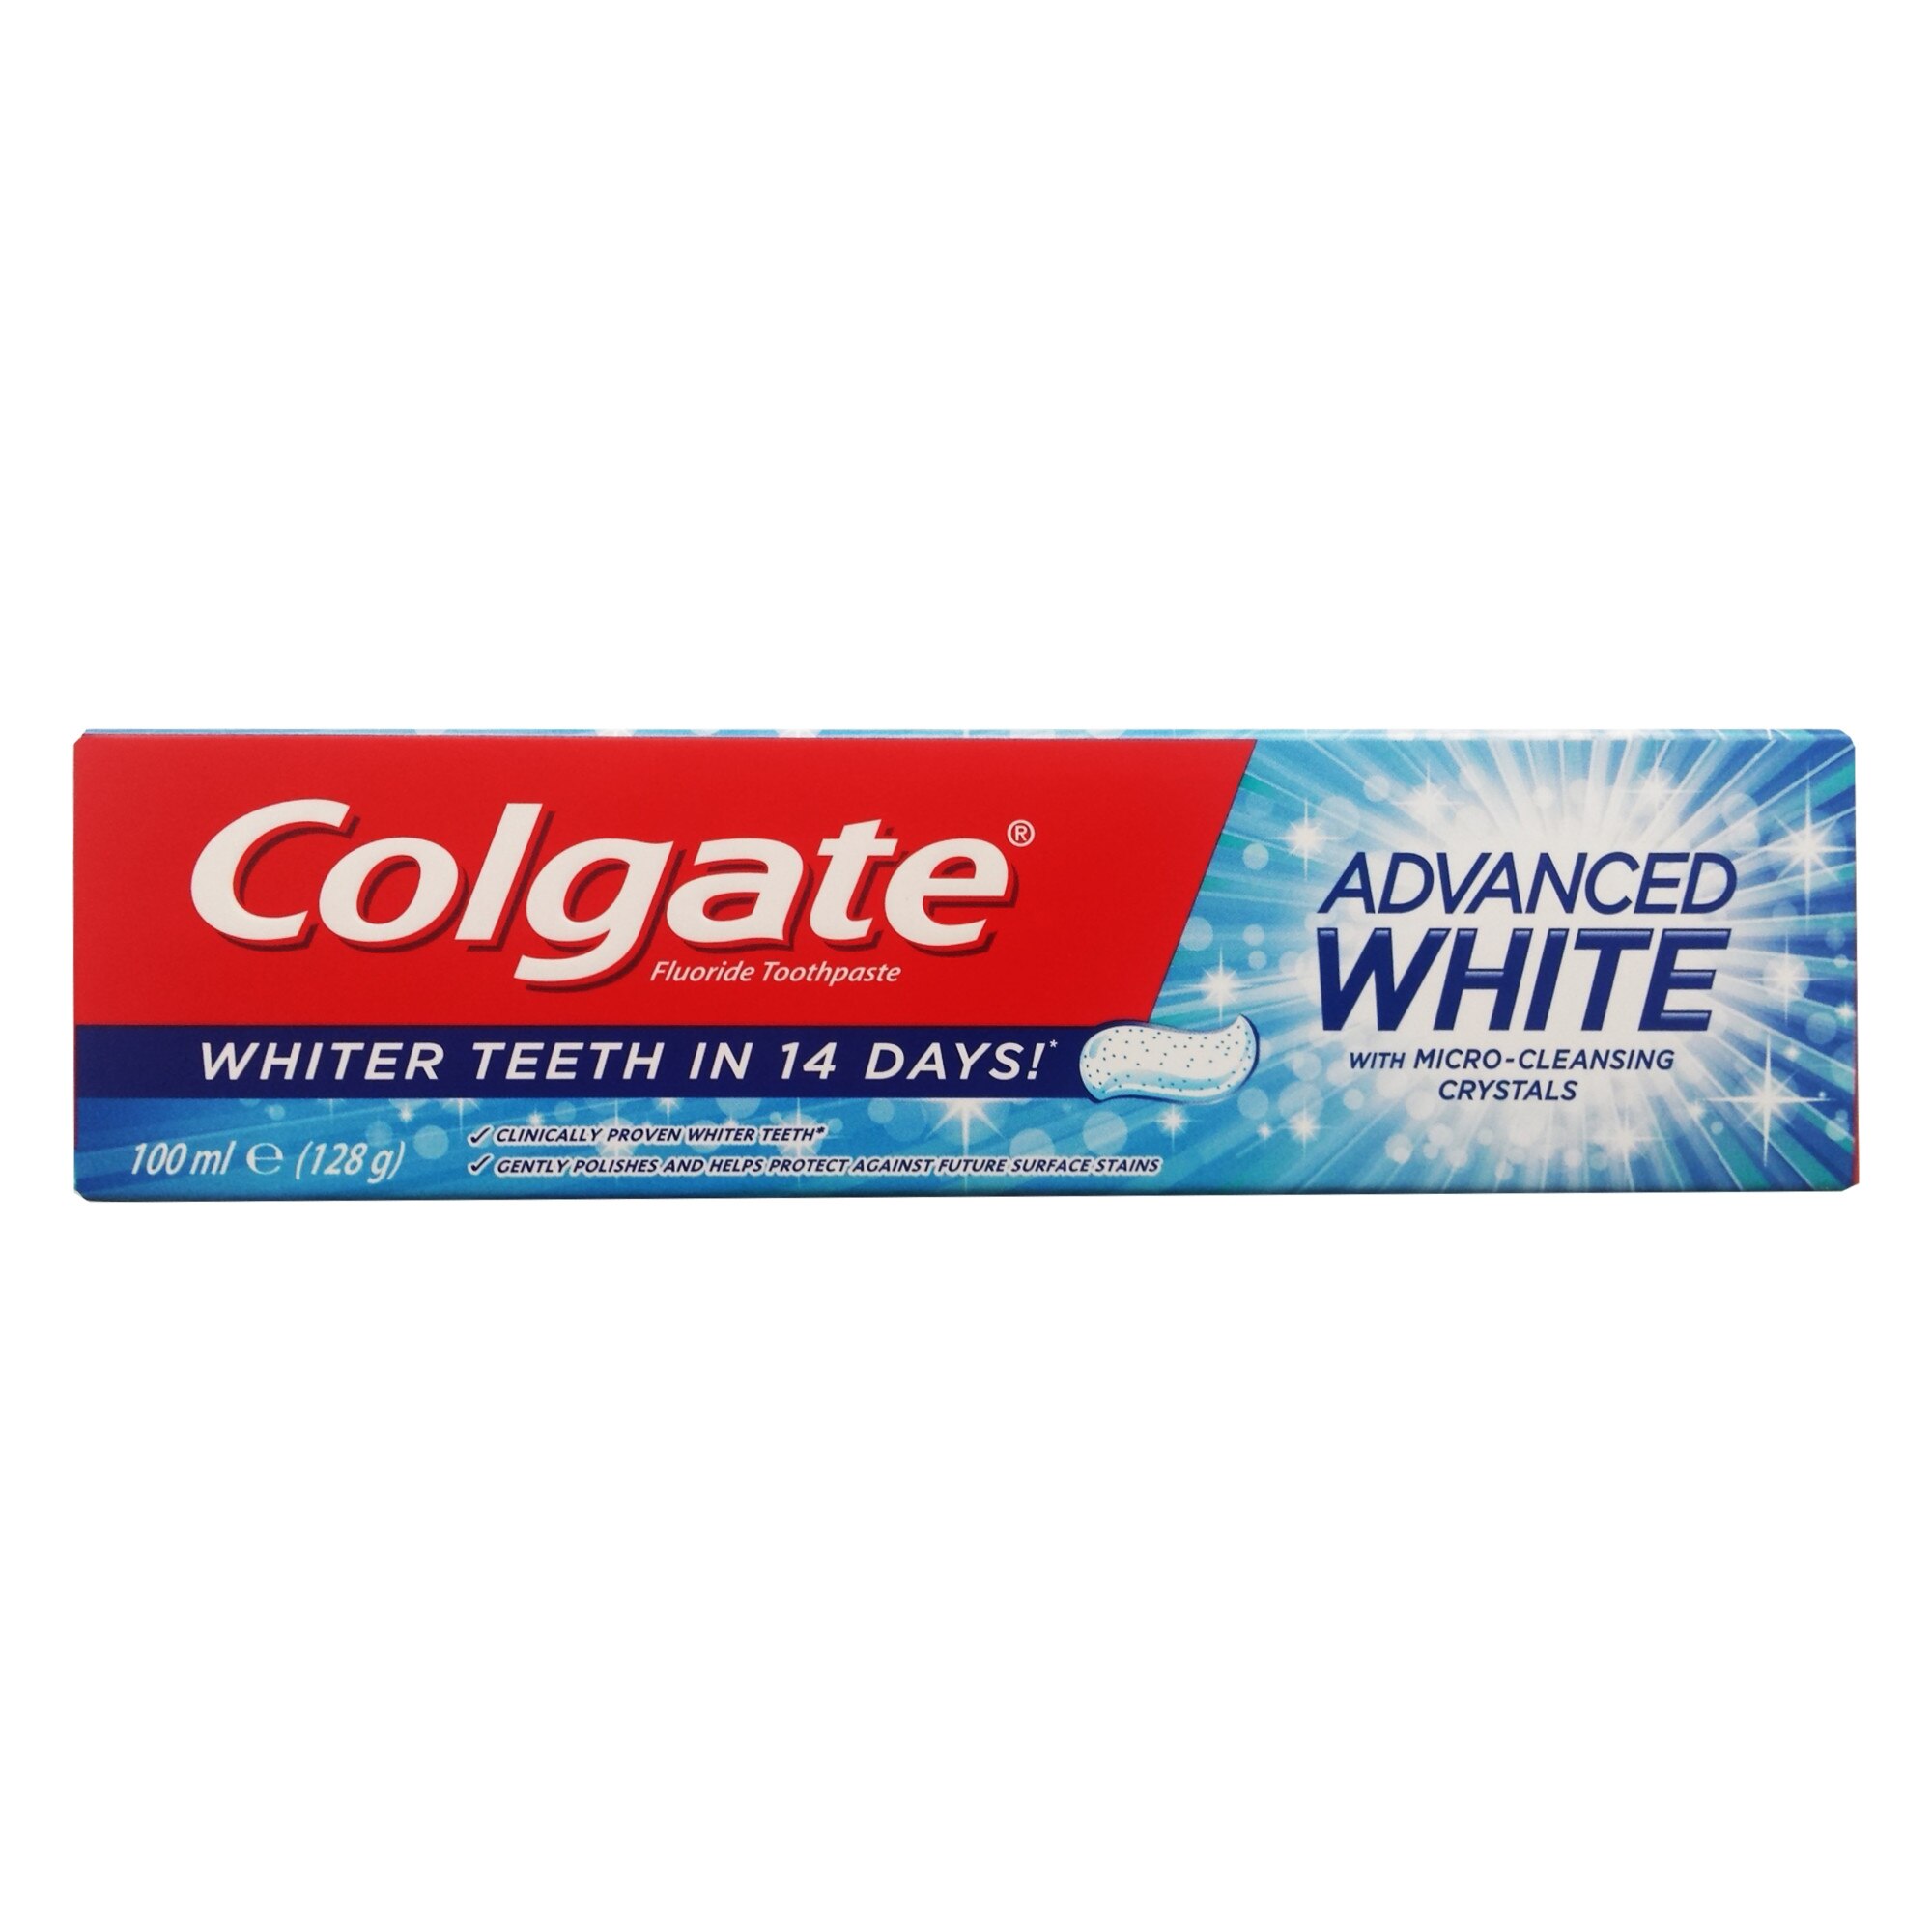 Colgate pasta advanced whitening, 100 ml, Colgate-Palmolive